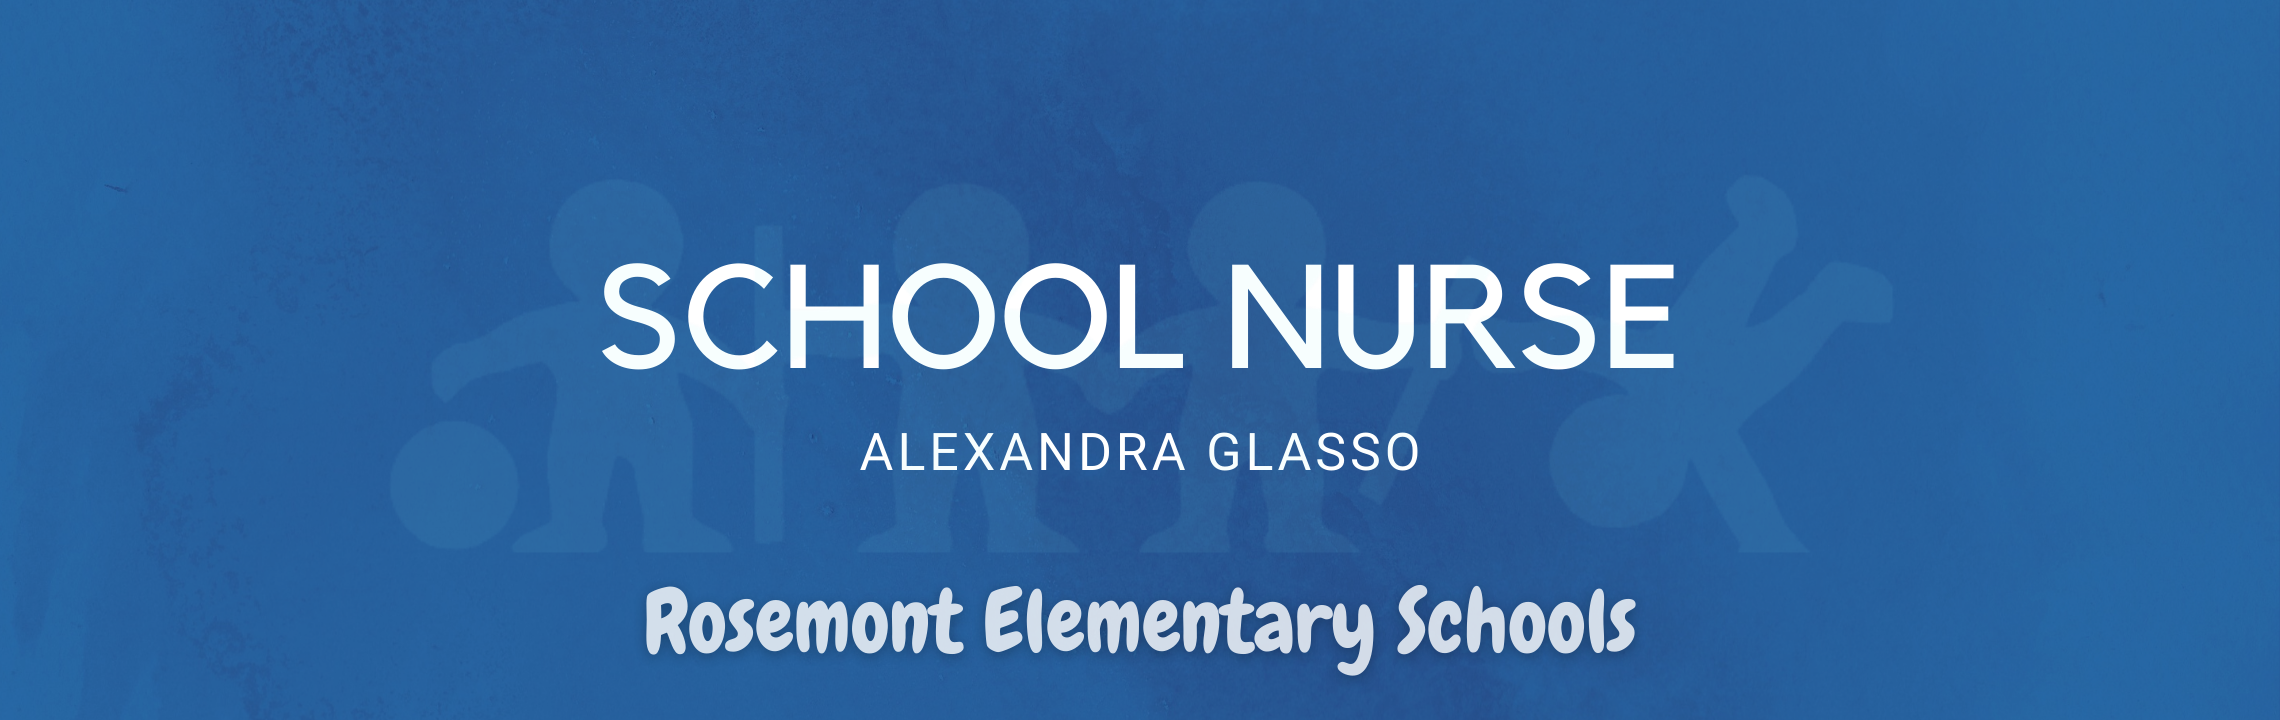 School Nurse: Alexandra Glasso, Rosemont Elementary Schools